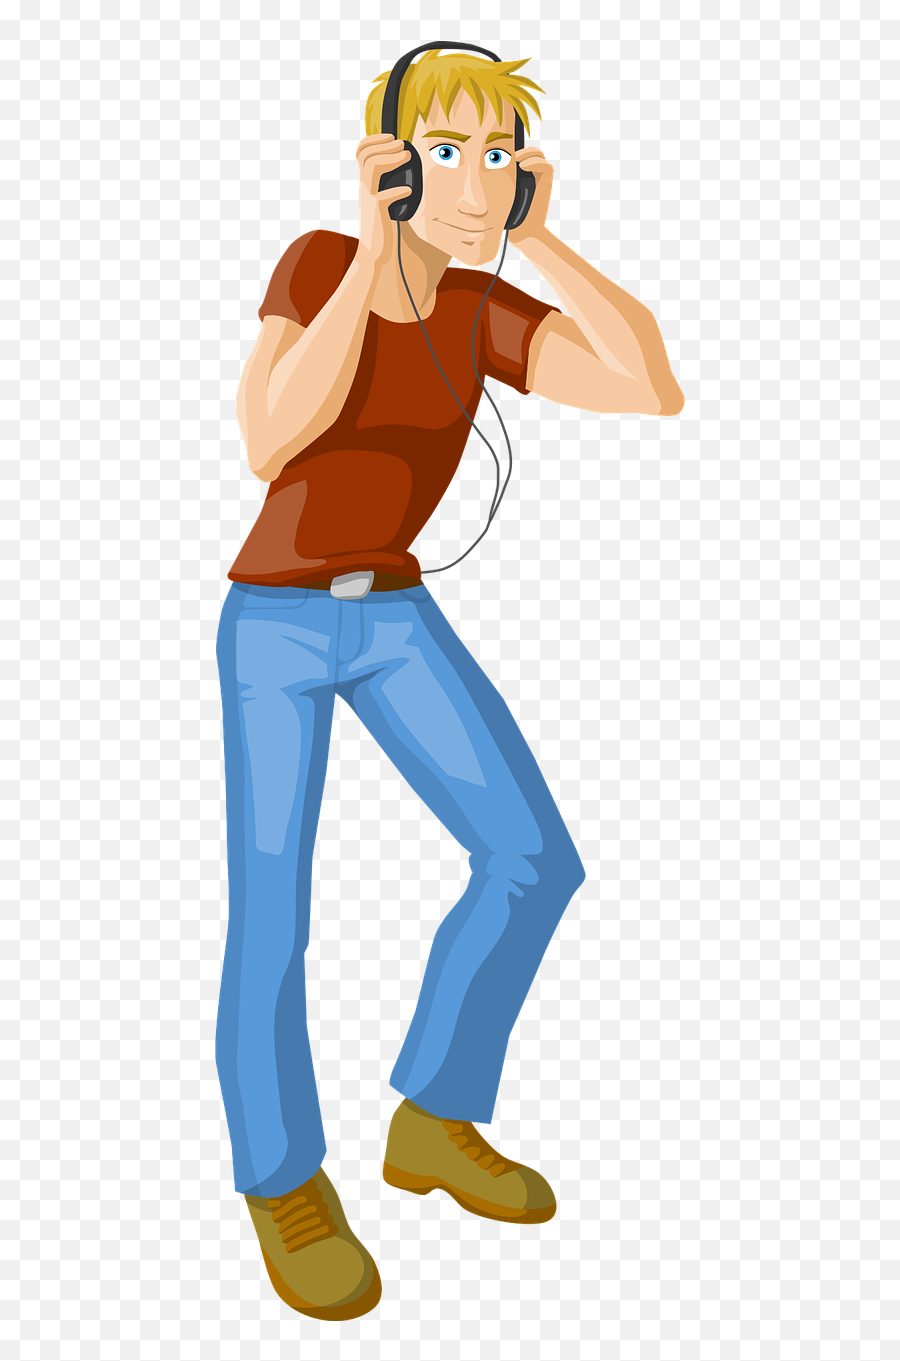 Man Guy Jeans Dancing Headphones Music Listening Emoji,Dancing Man Emoji